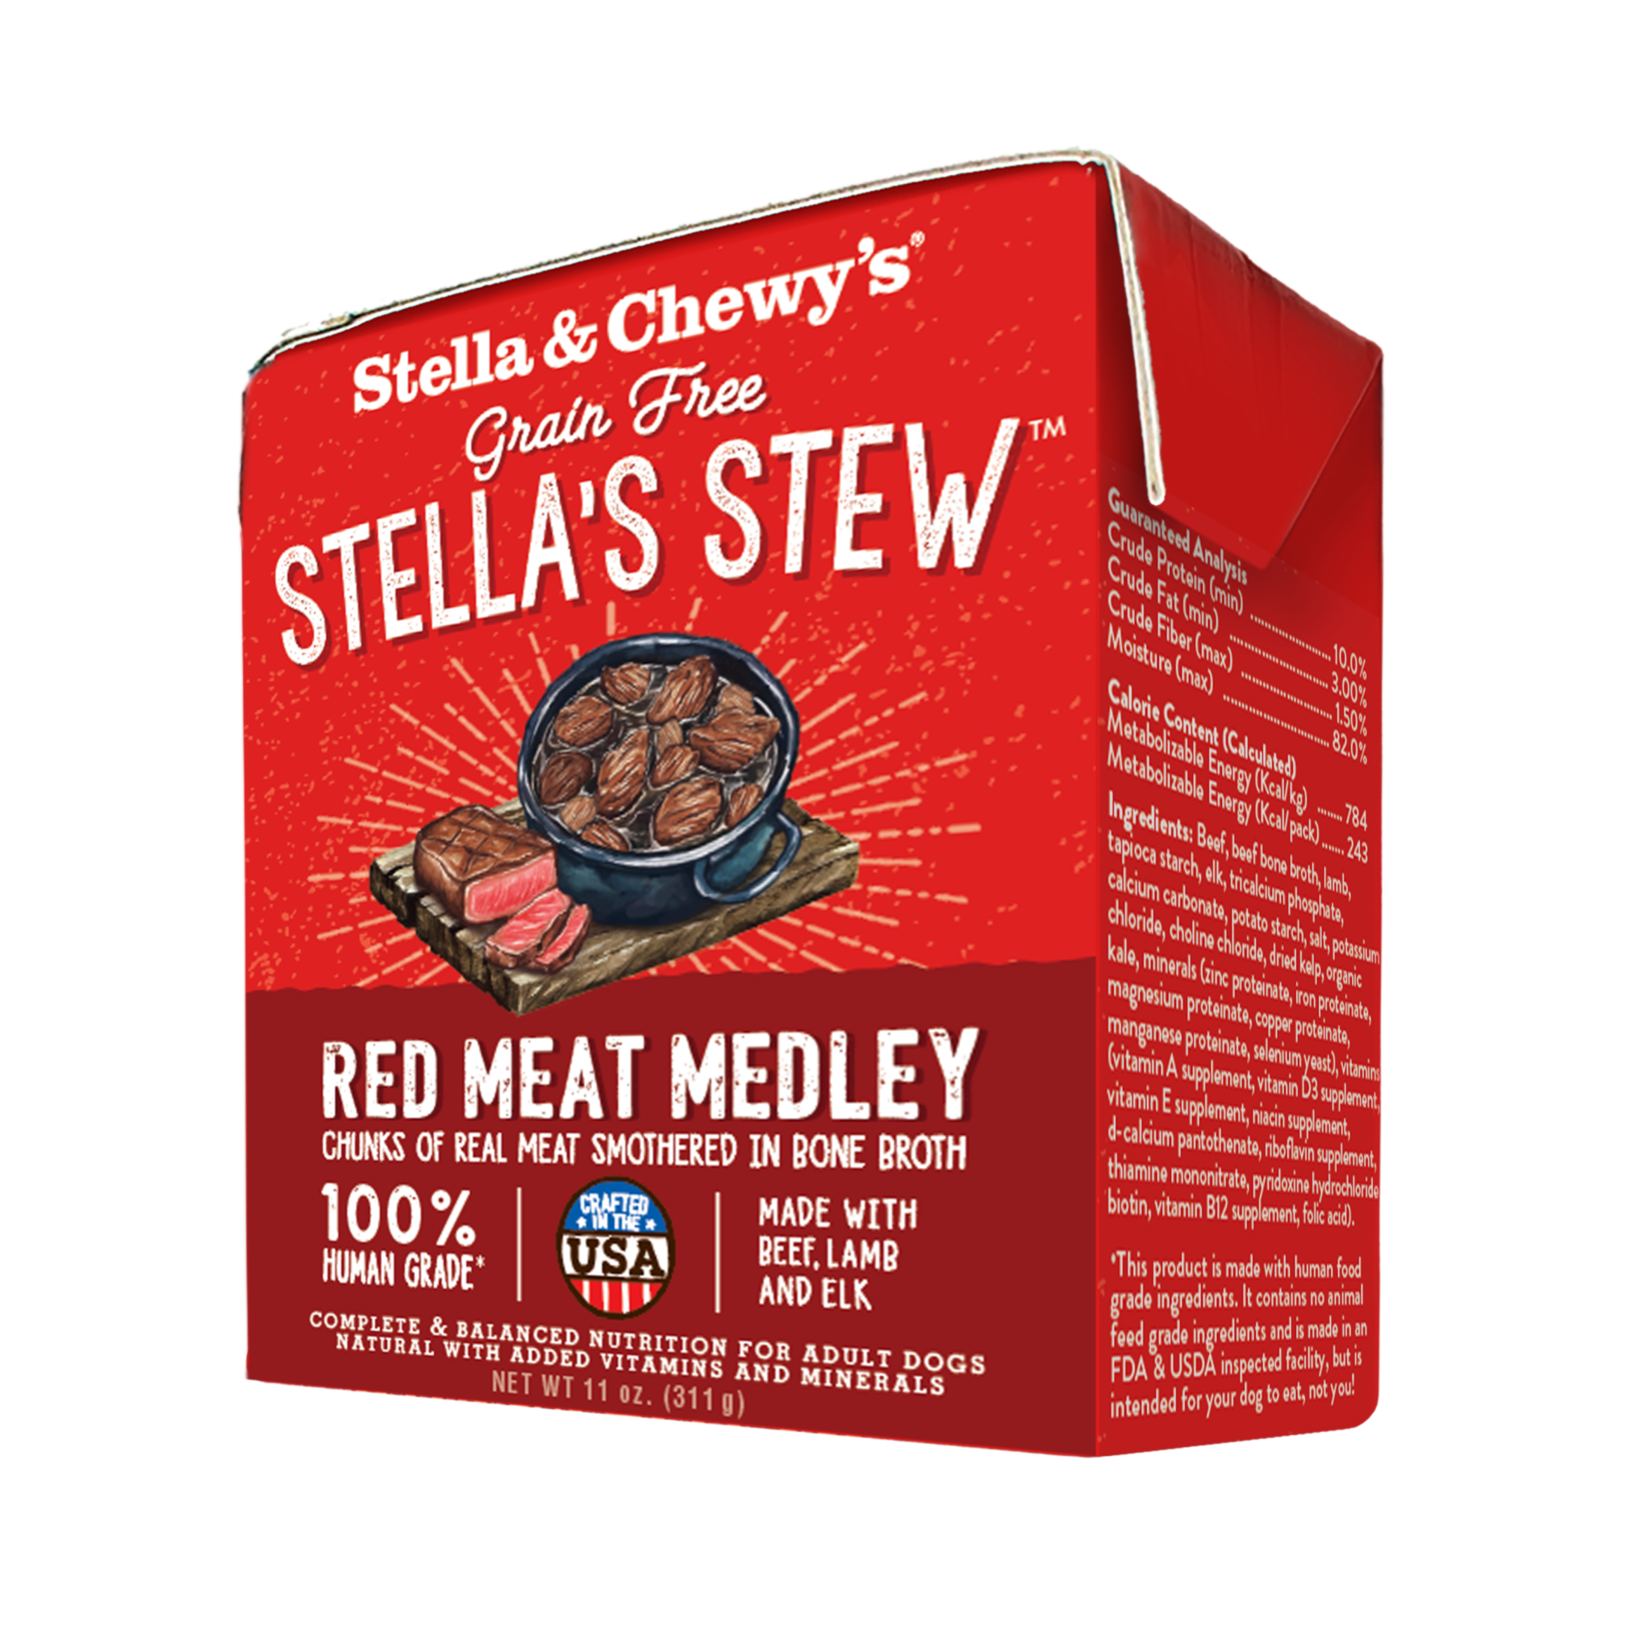 Stella & Chewy’s Stella's Stew - Red Meat Medley